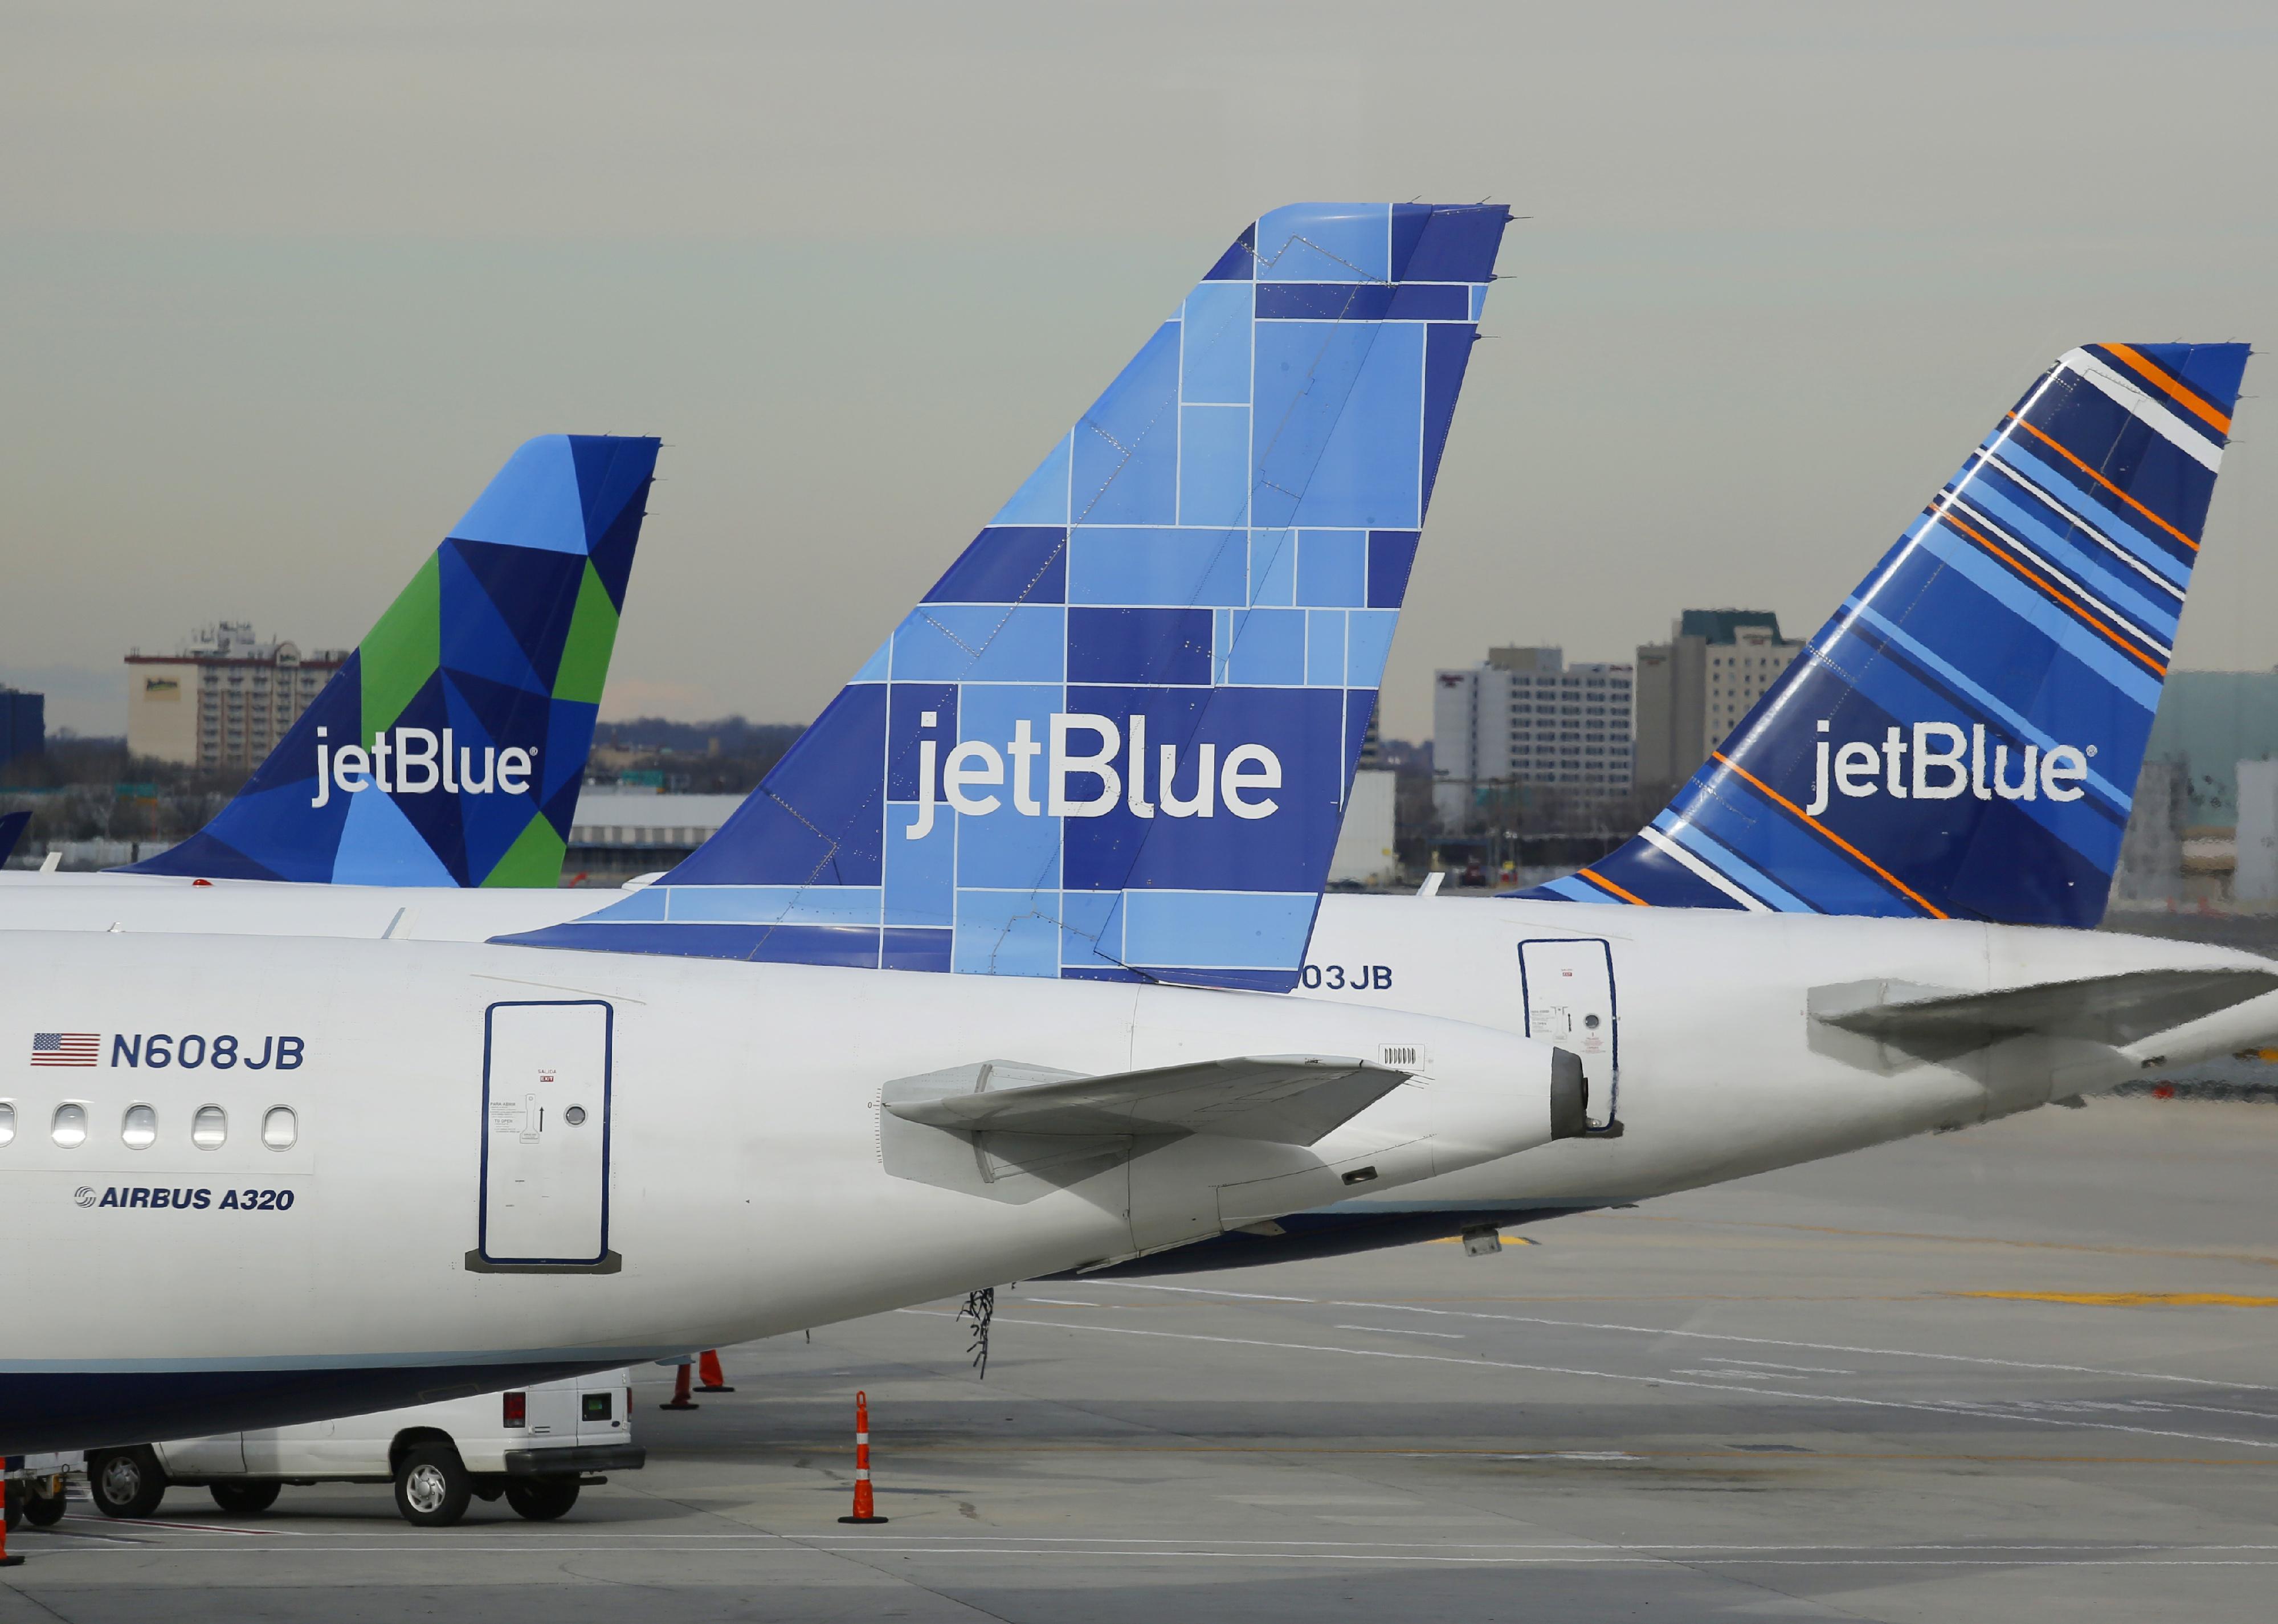 JetBlue Airbus A320 aircraft at the gates